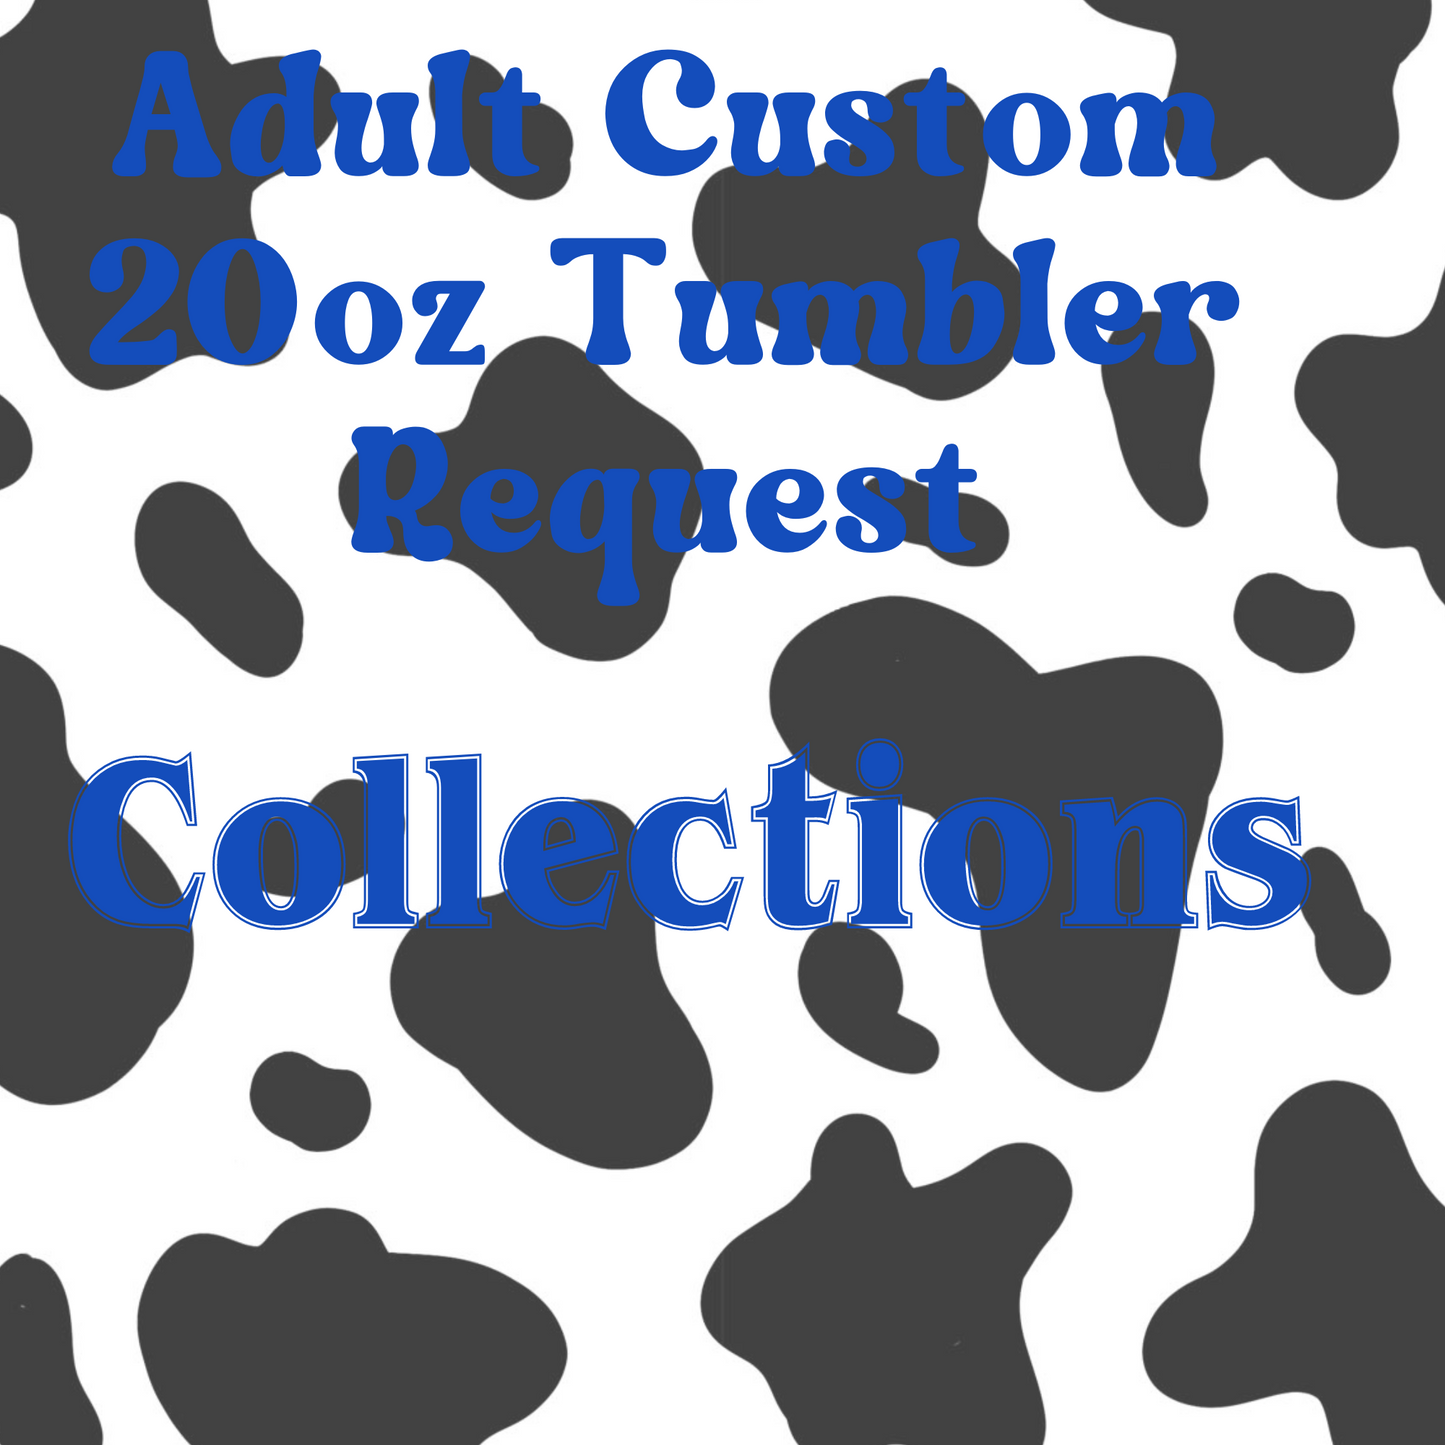 Adult Custom 20oz Tumbler Request